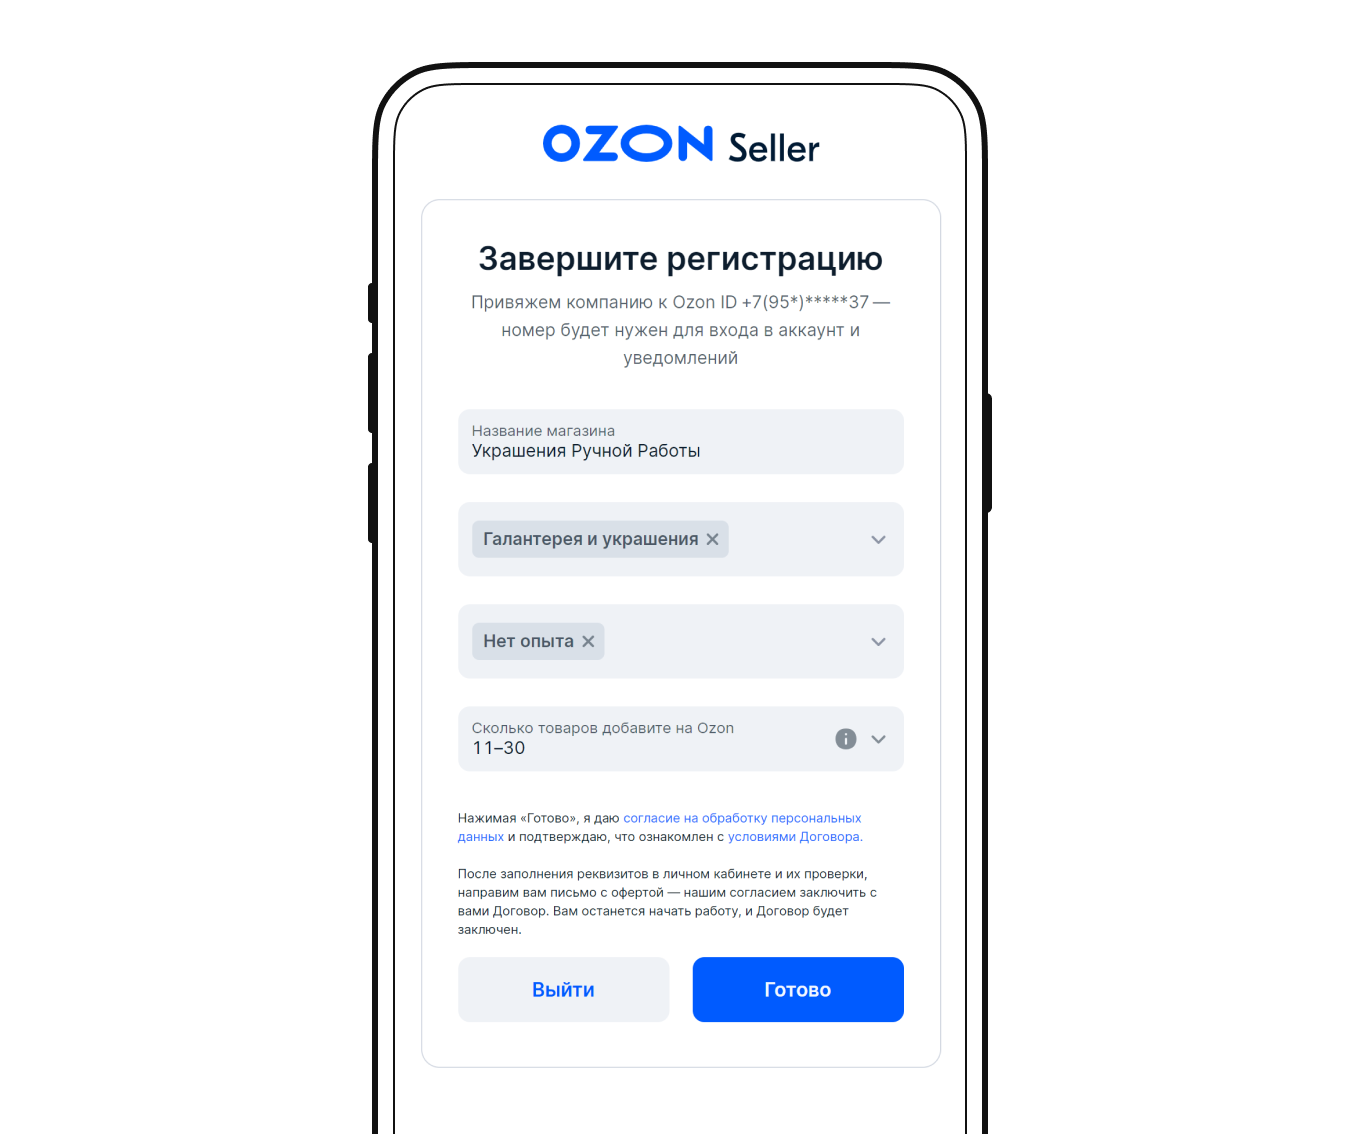 Ozon Seller: завершение регистрации